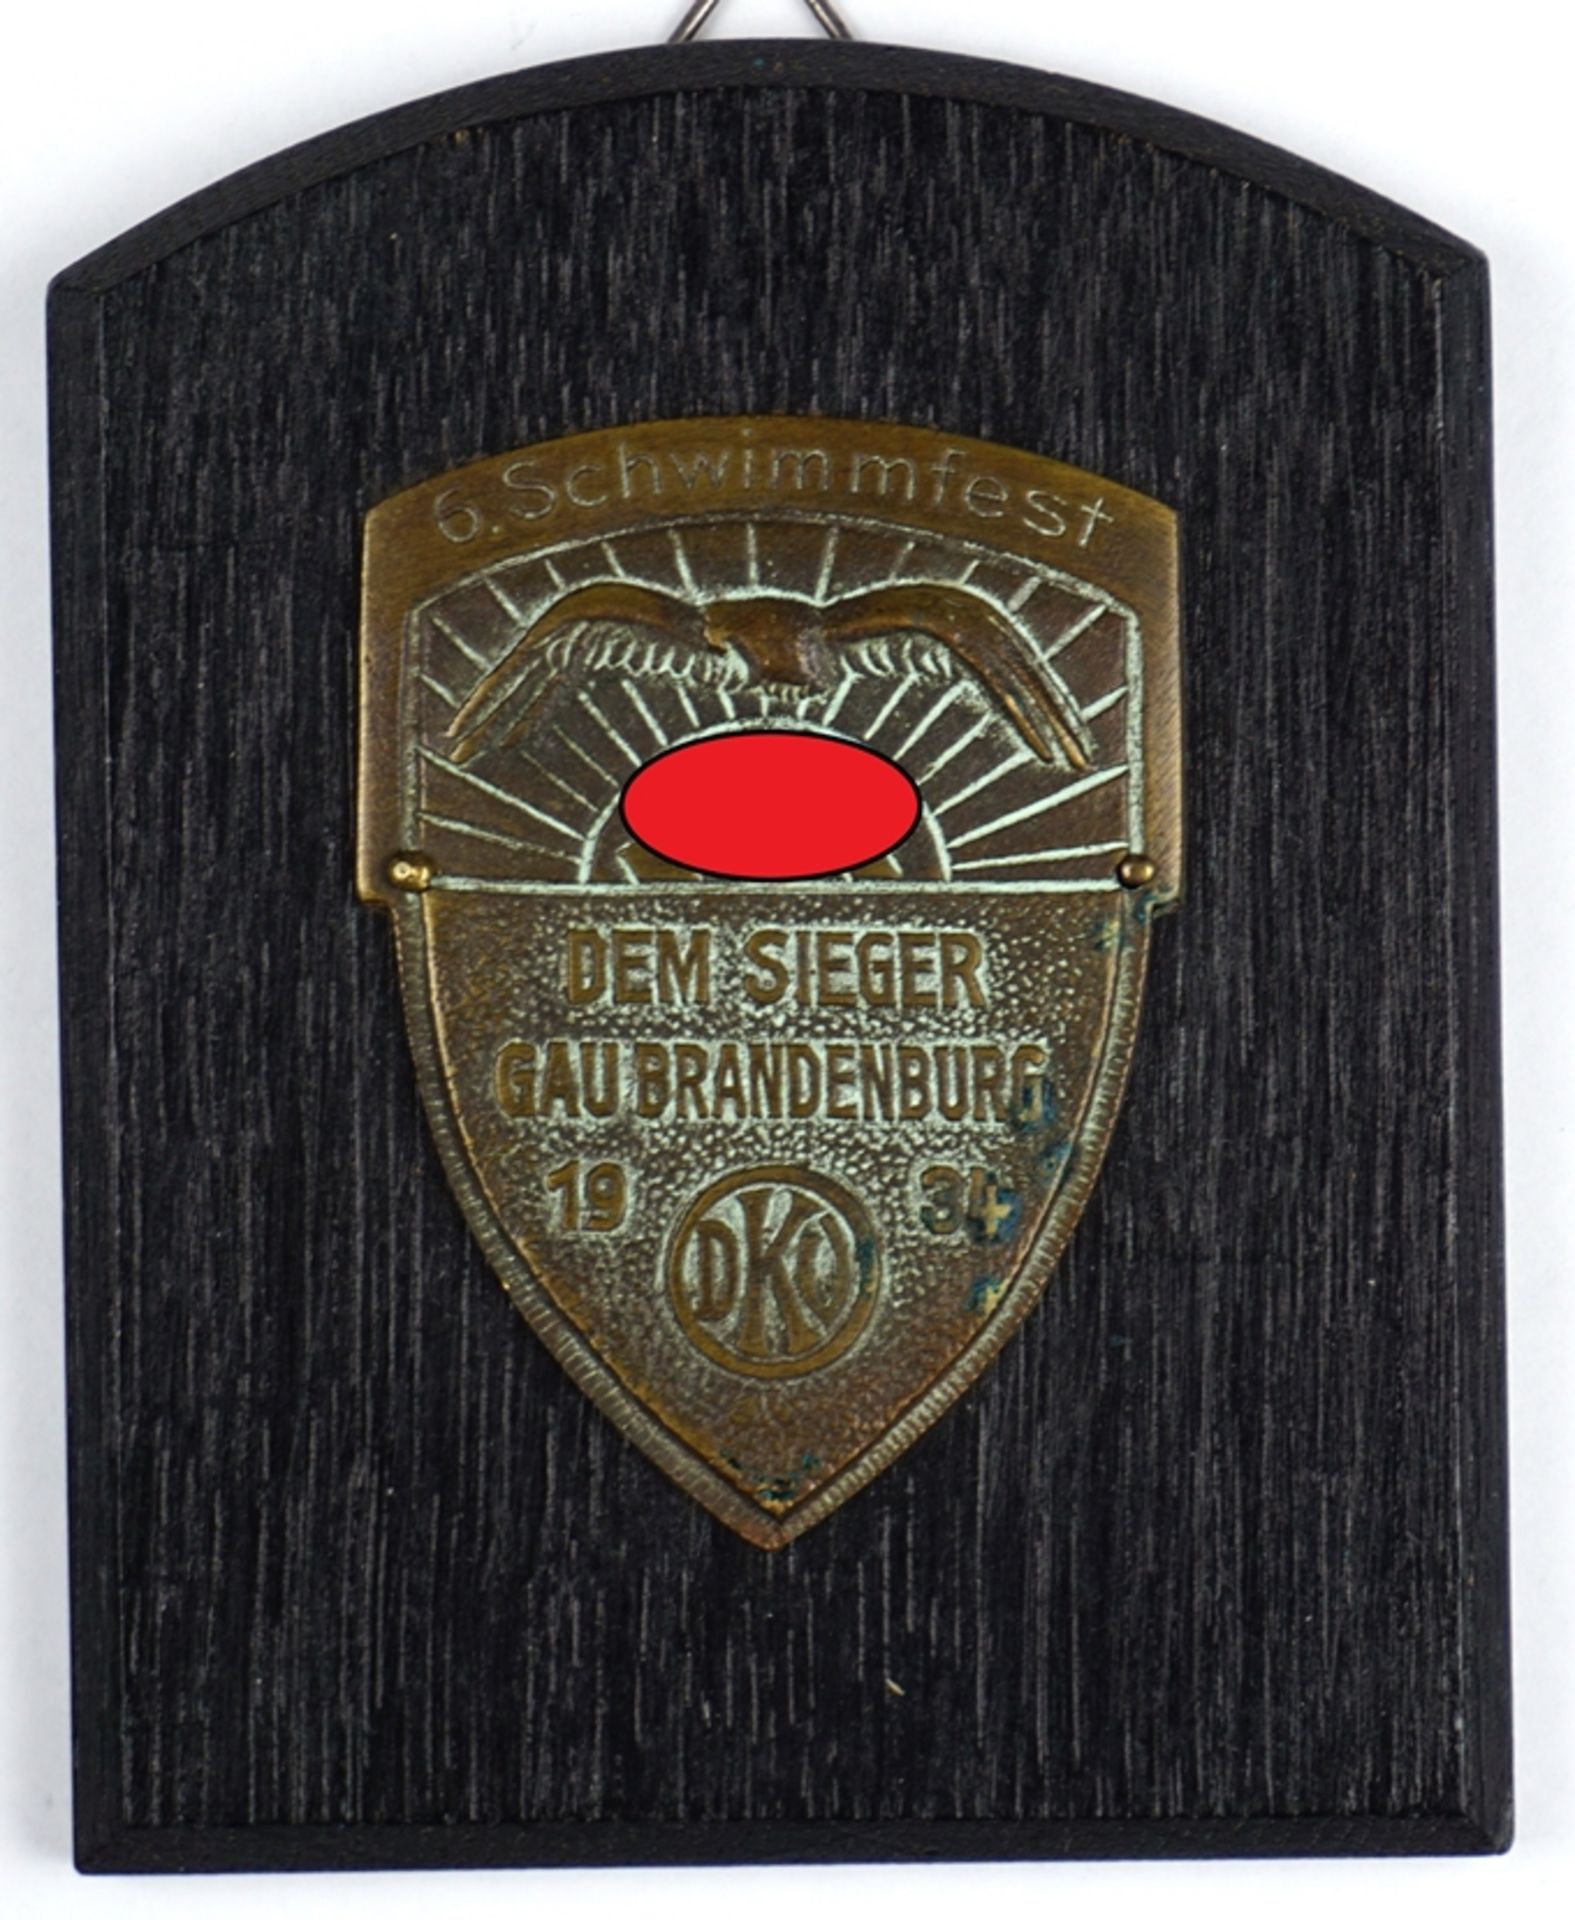 DKV-Plakette "Dem Sieger Gau Brandenburg" 1934